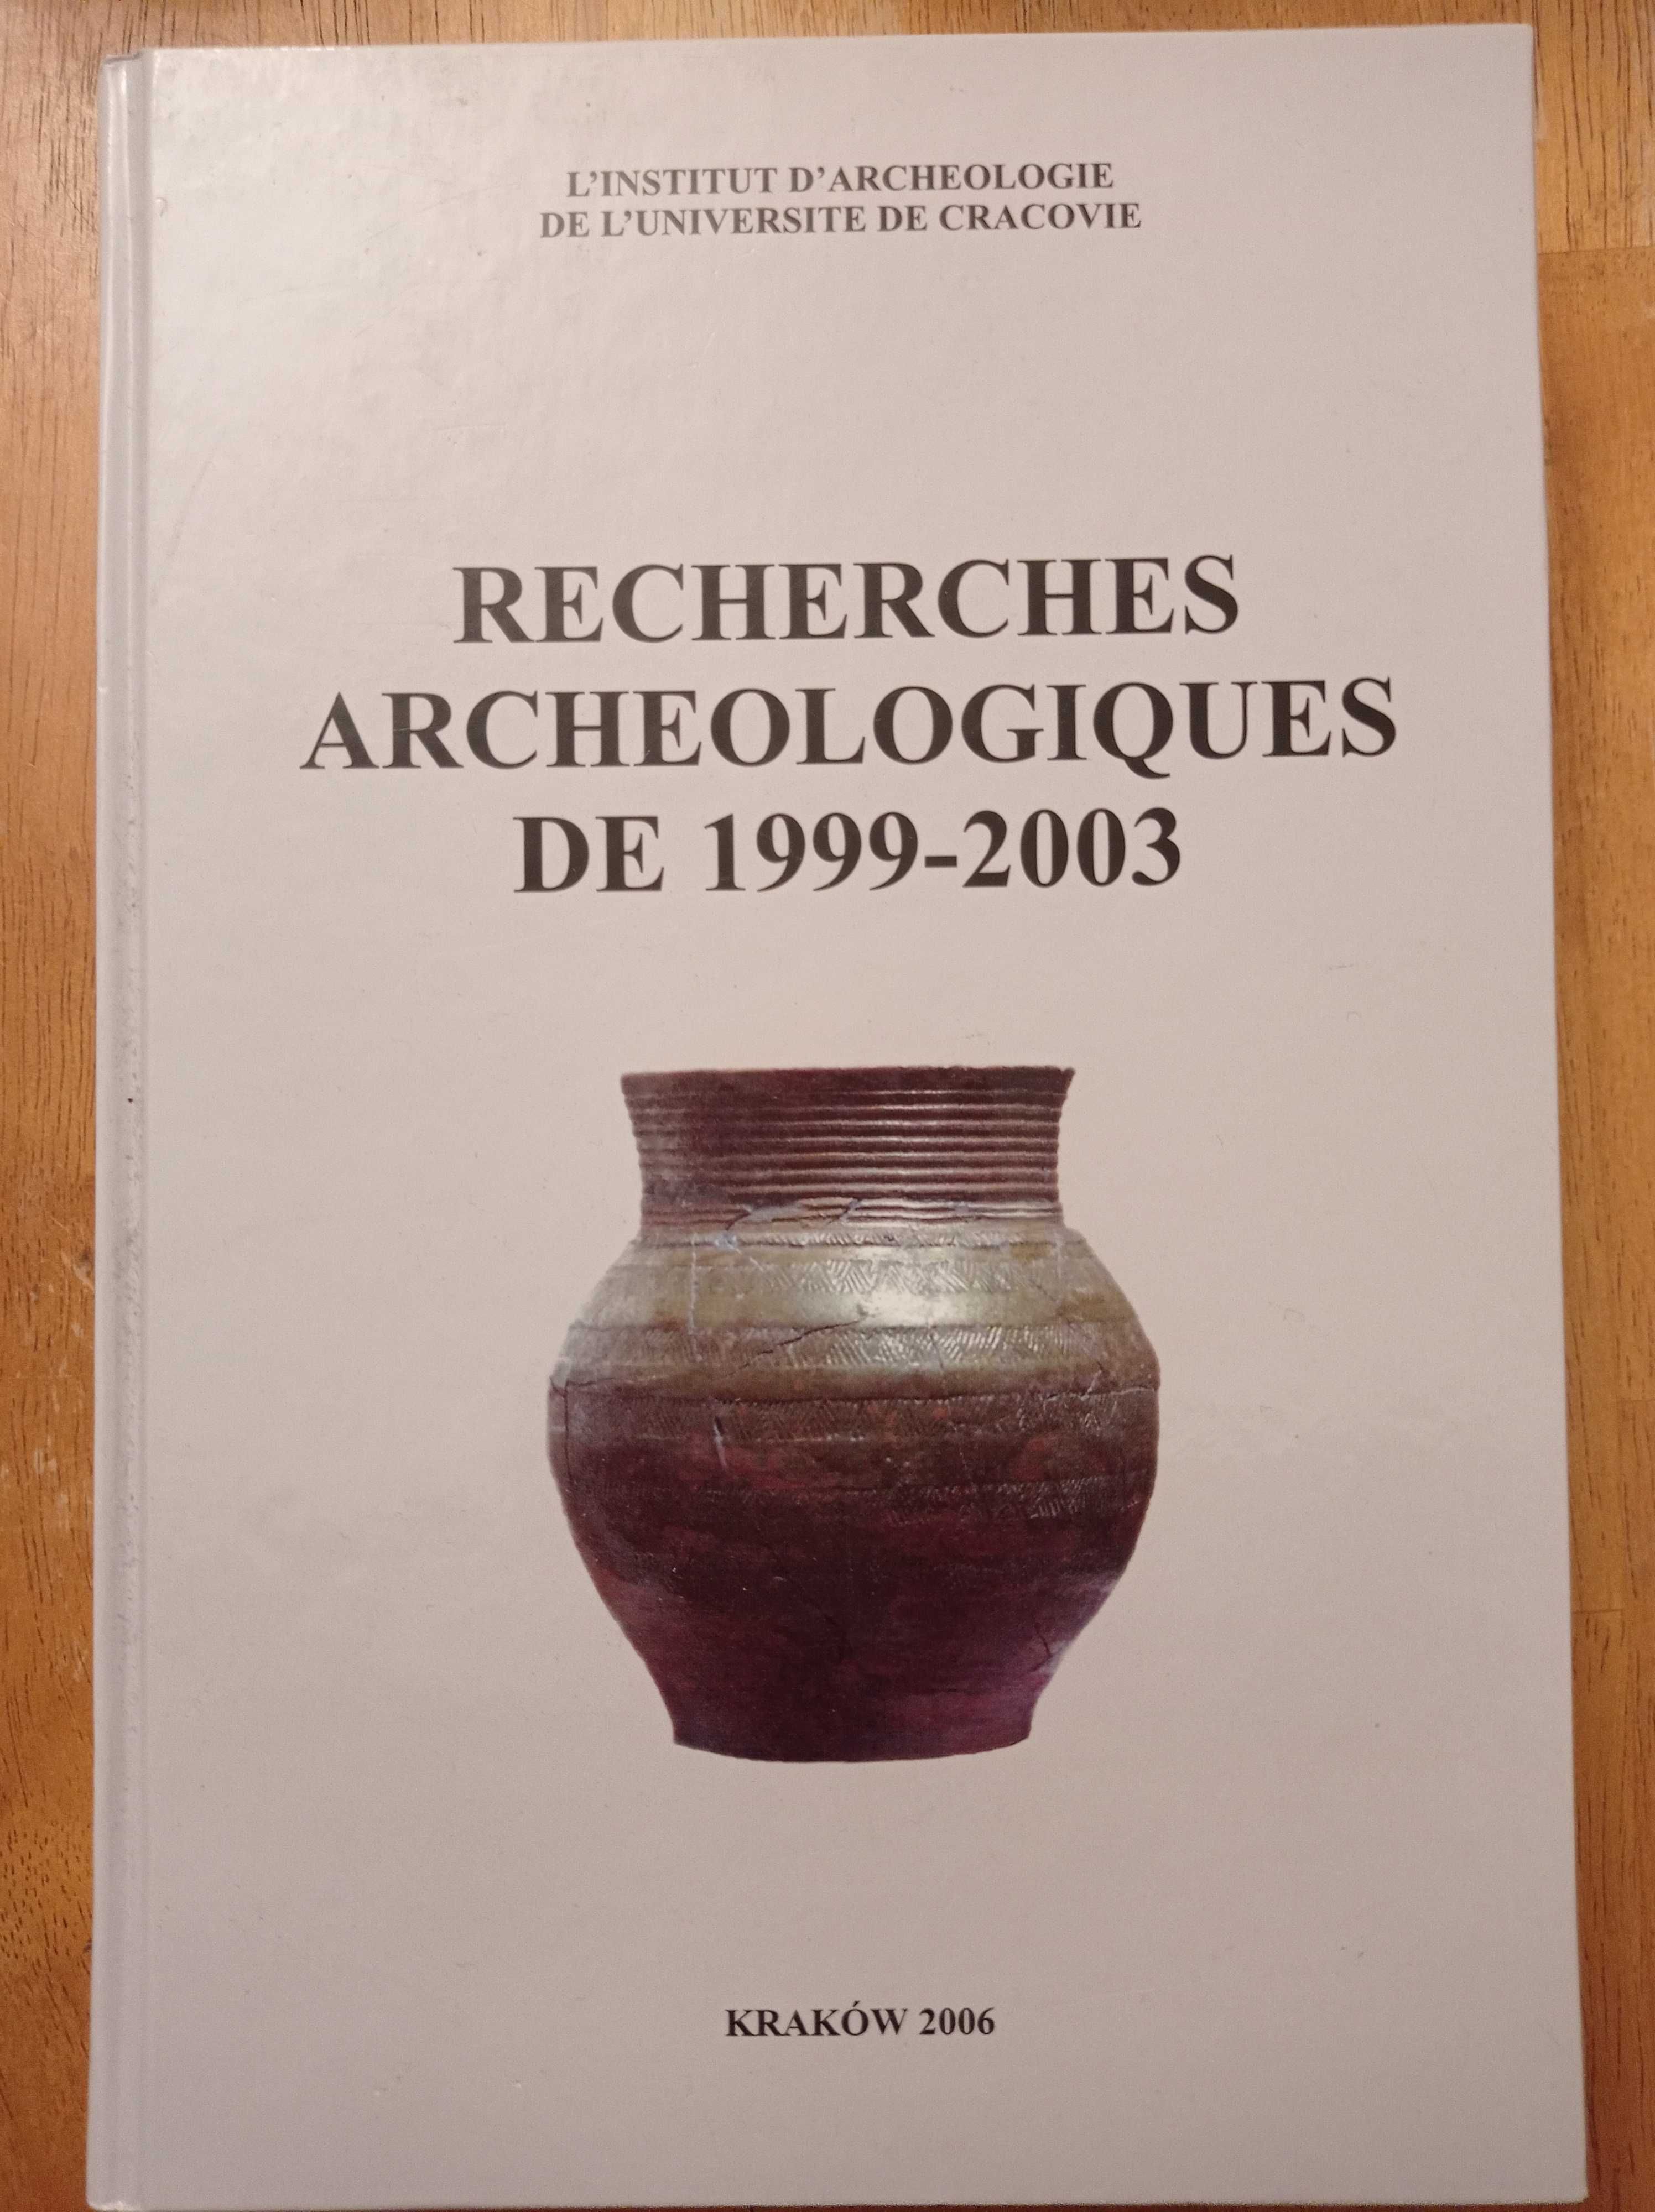 Recherches Archeologiques...  archeologia badania archeologiczne UJ